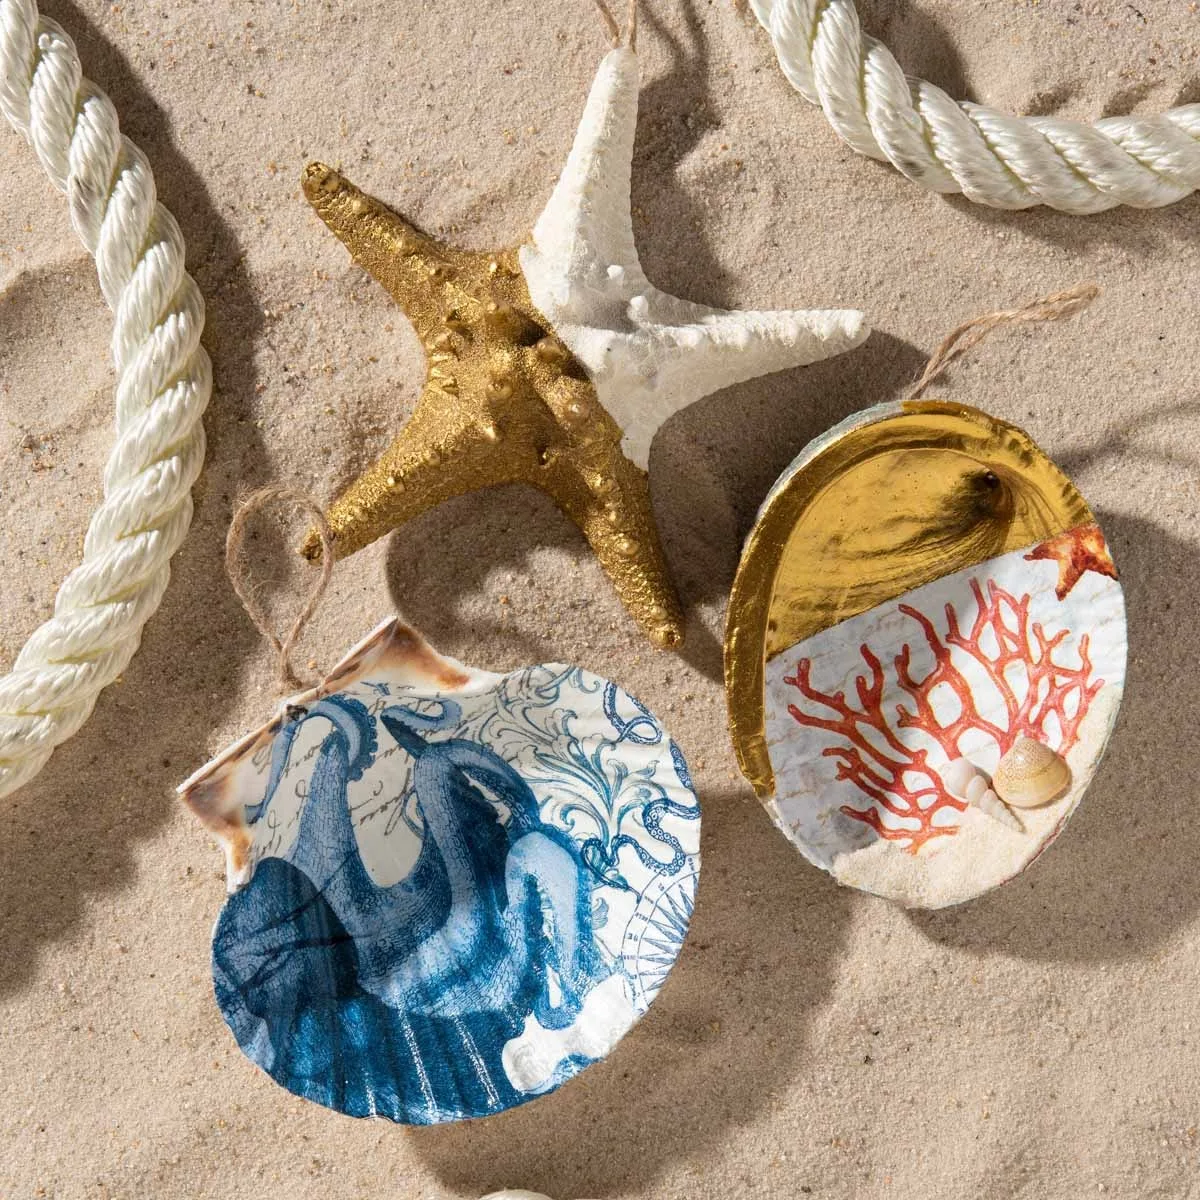 https://modpodgerocksblog.b-cdn.net/wp-content/uploads/2020/07/Mod-Podge-Ultra-seashell-ornaments.jpeg.webp